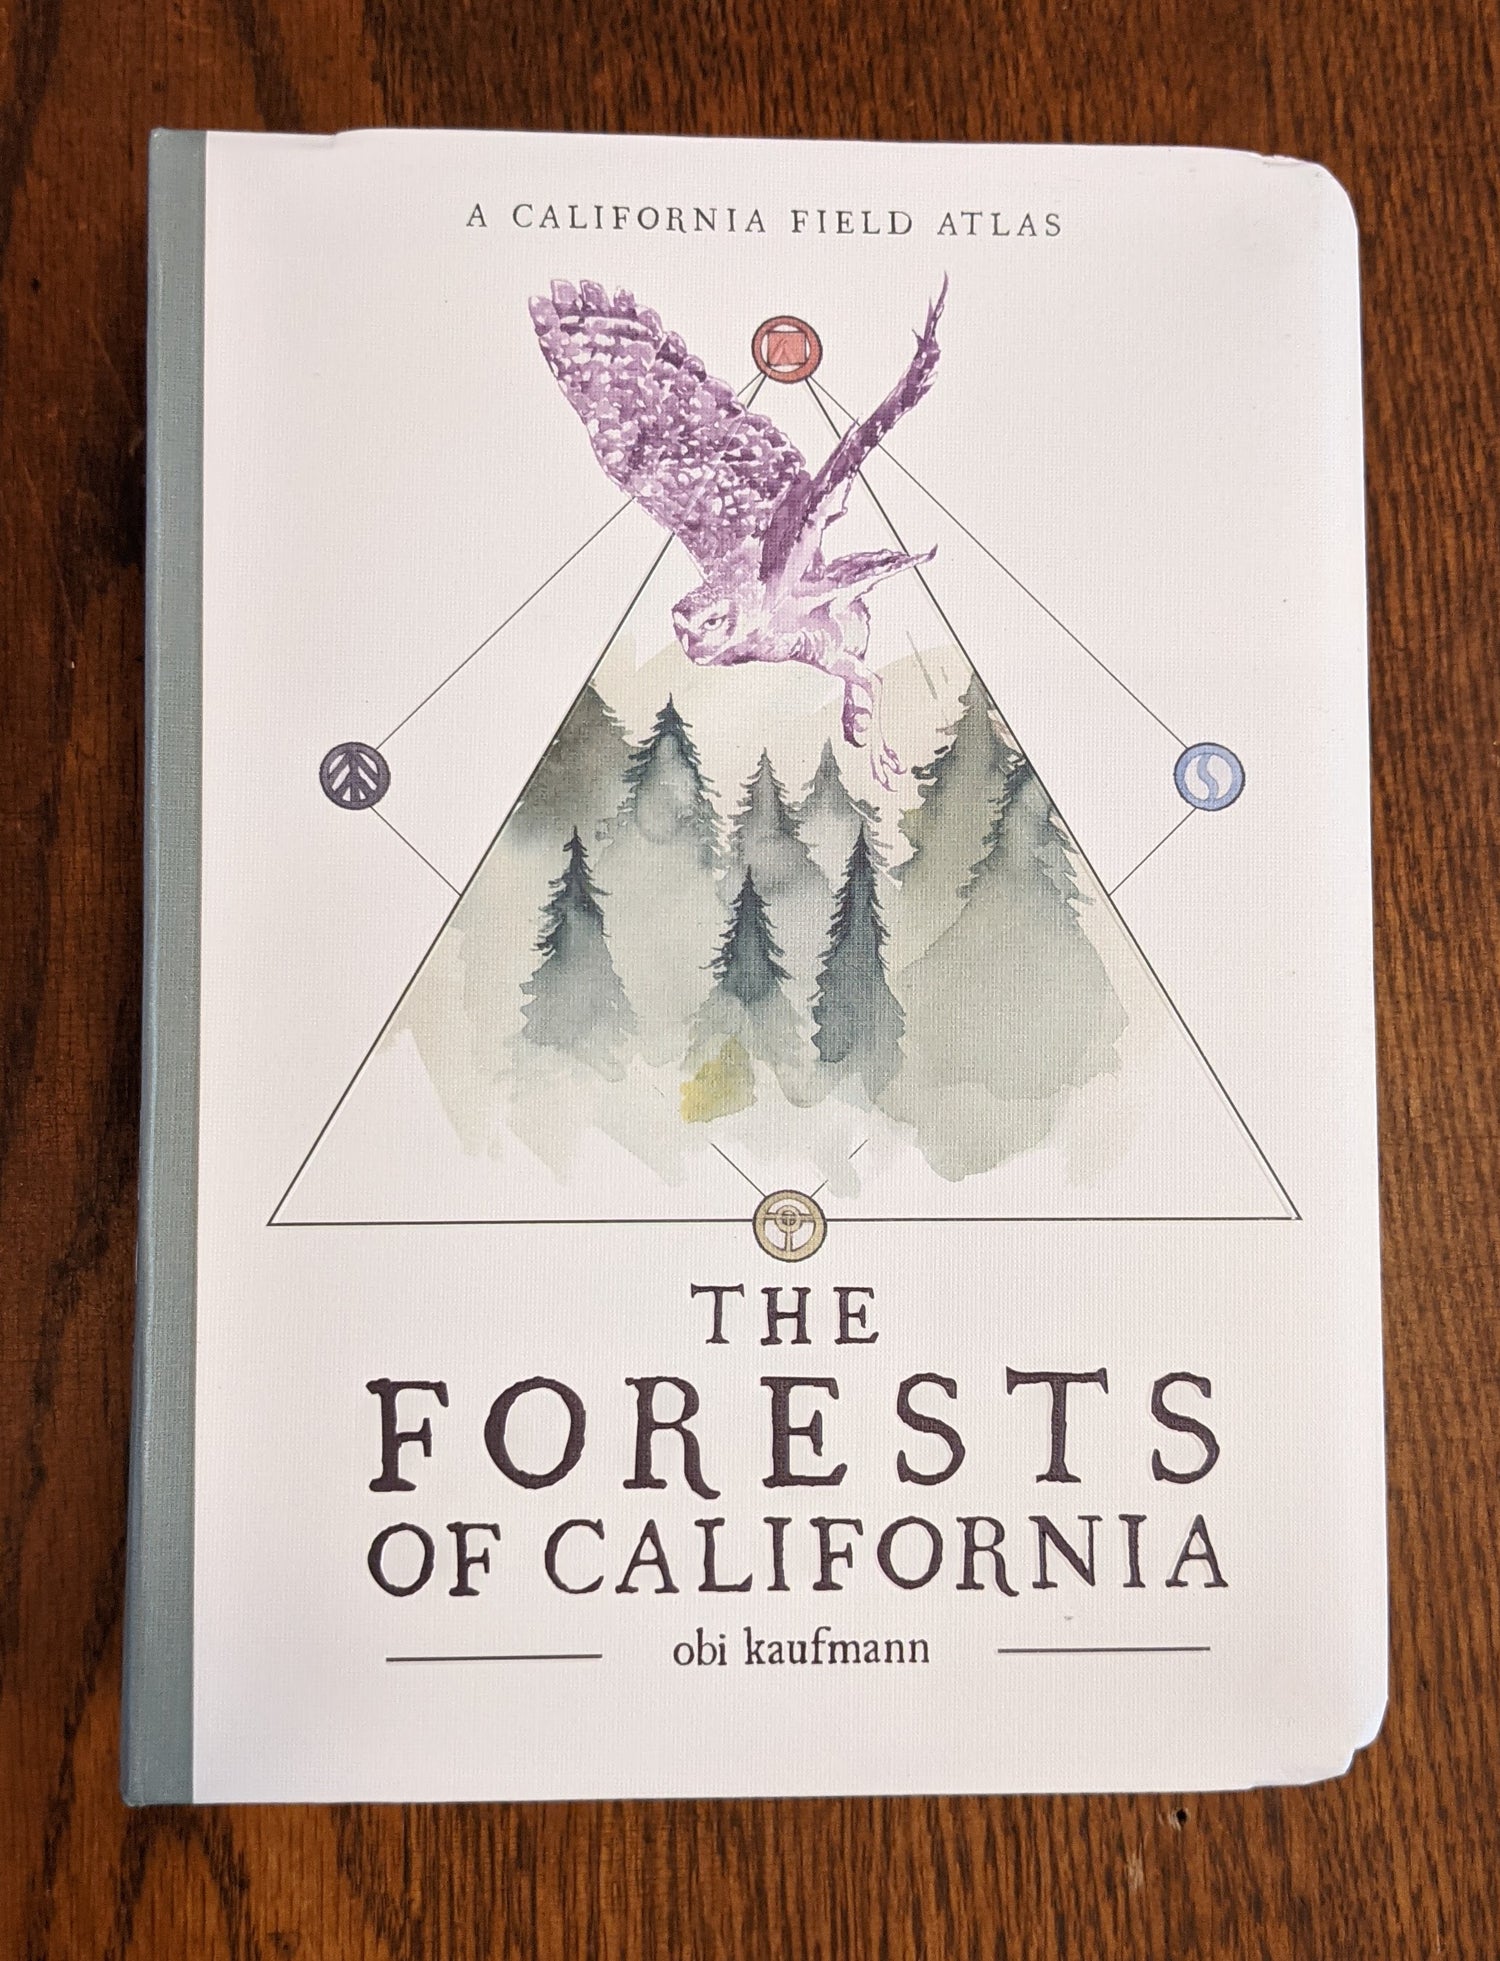 California Field Atlas Forests of California book by Obi Kaufmann